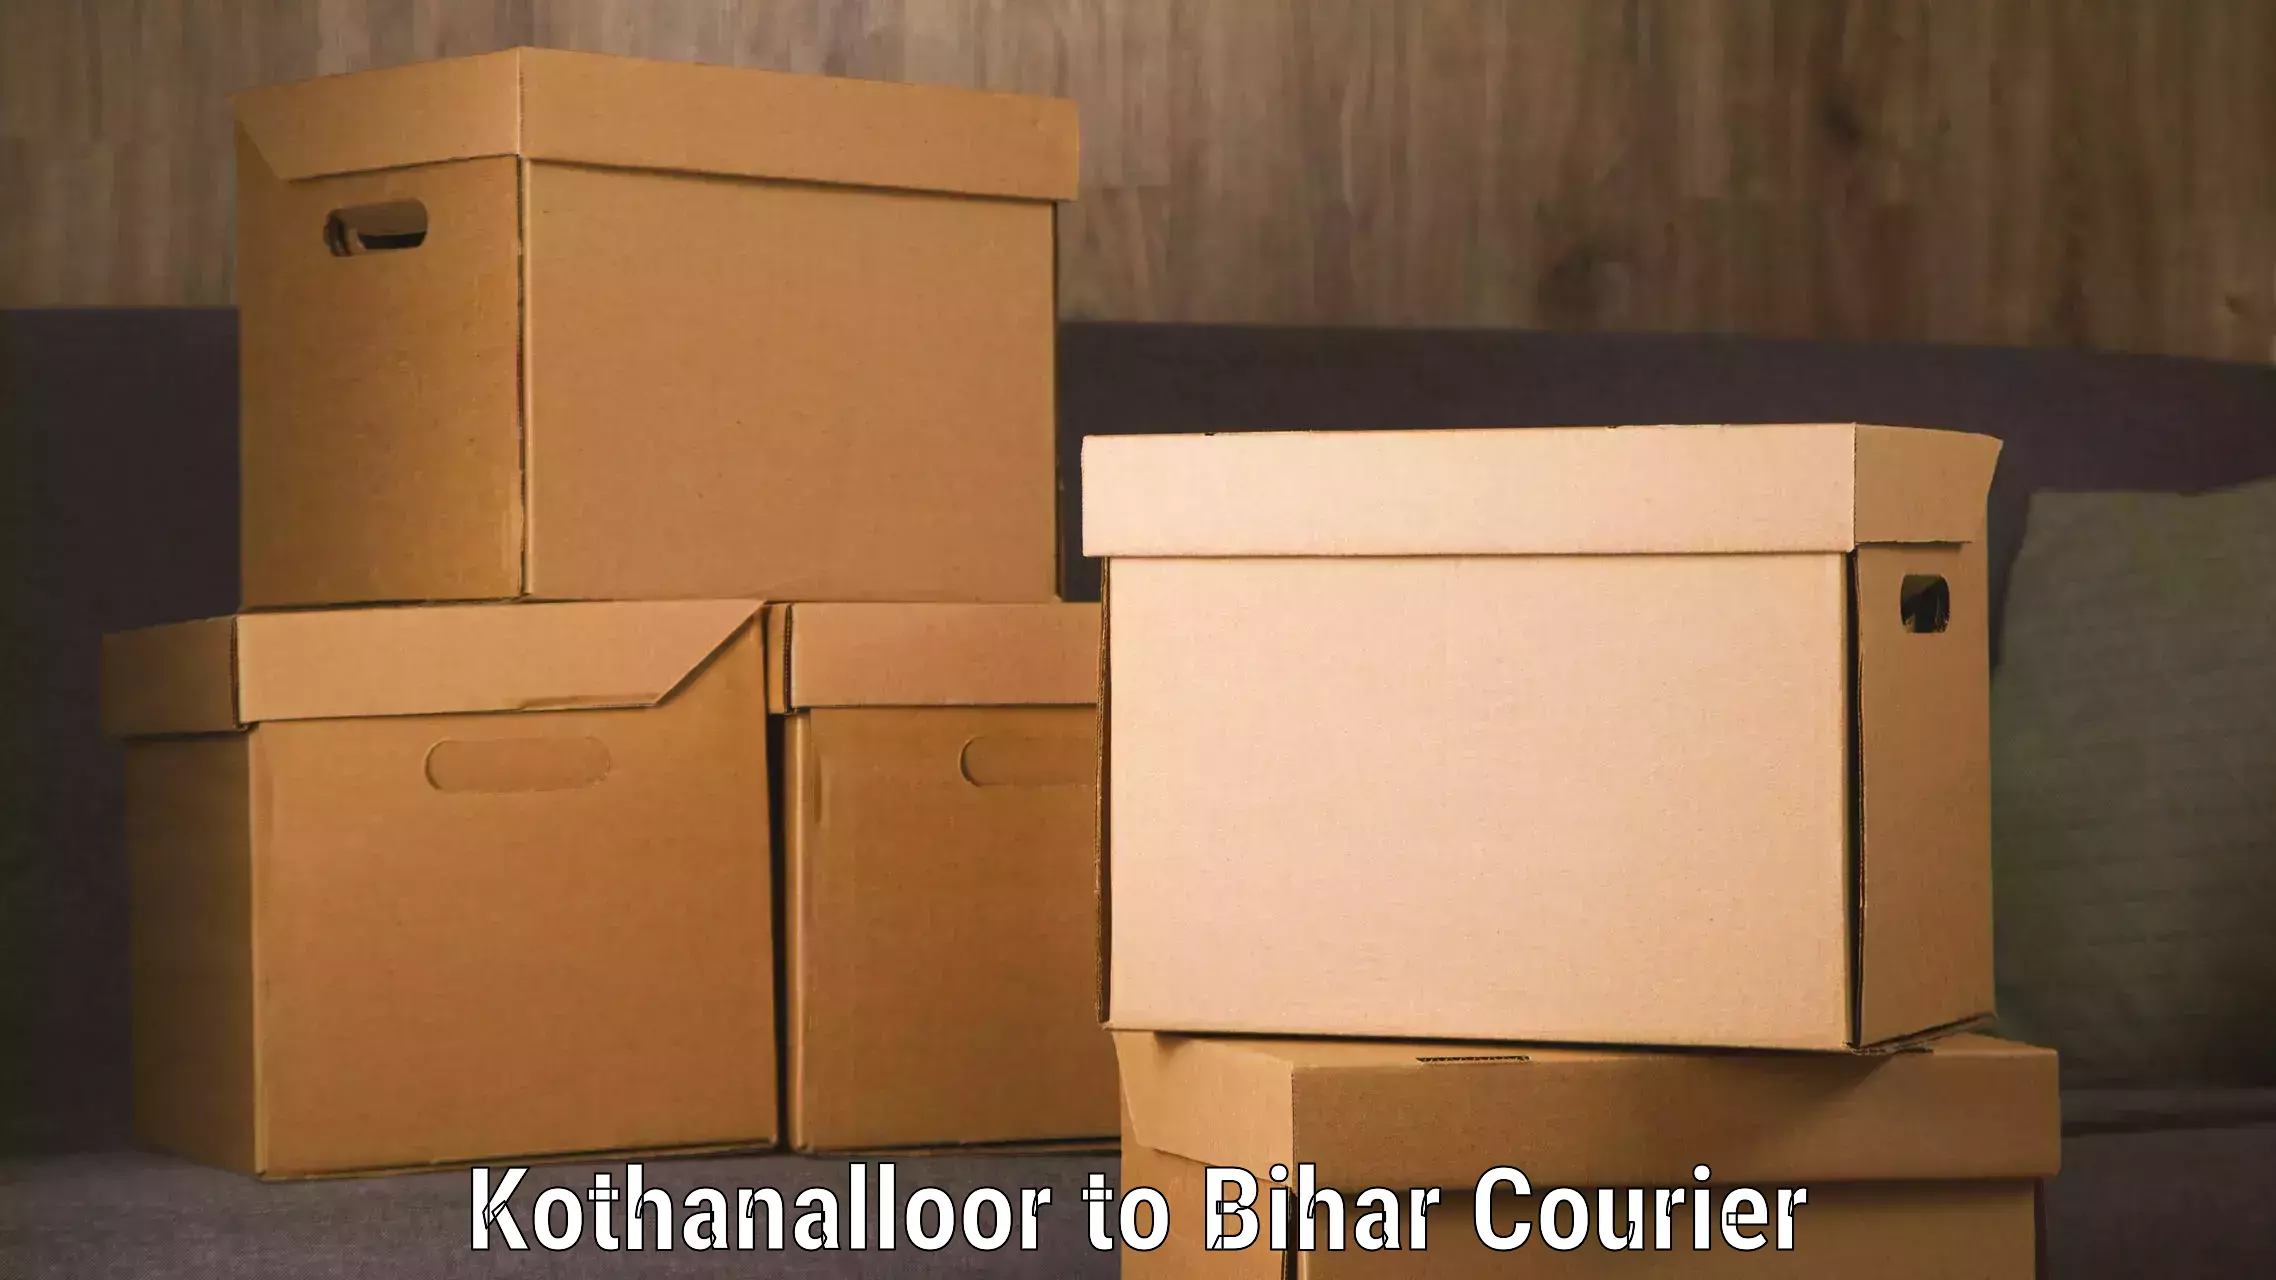 State-of-the-art courier technology Kothanalloor to Bihar